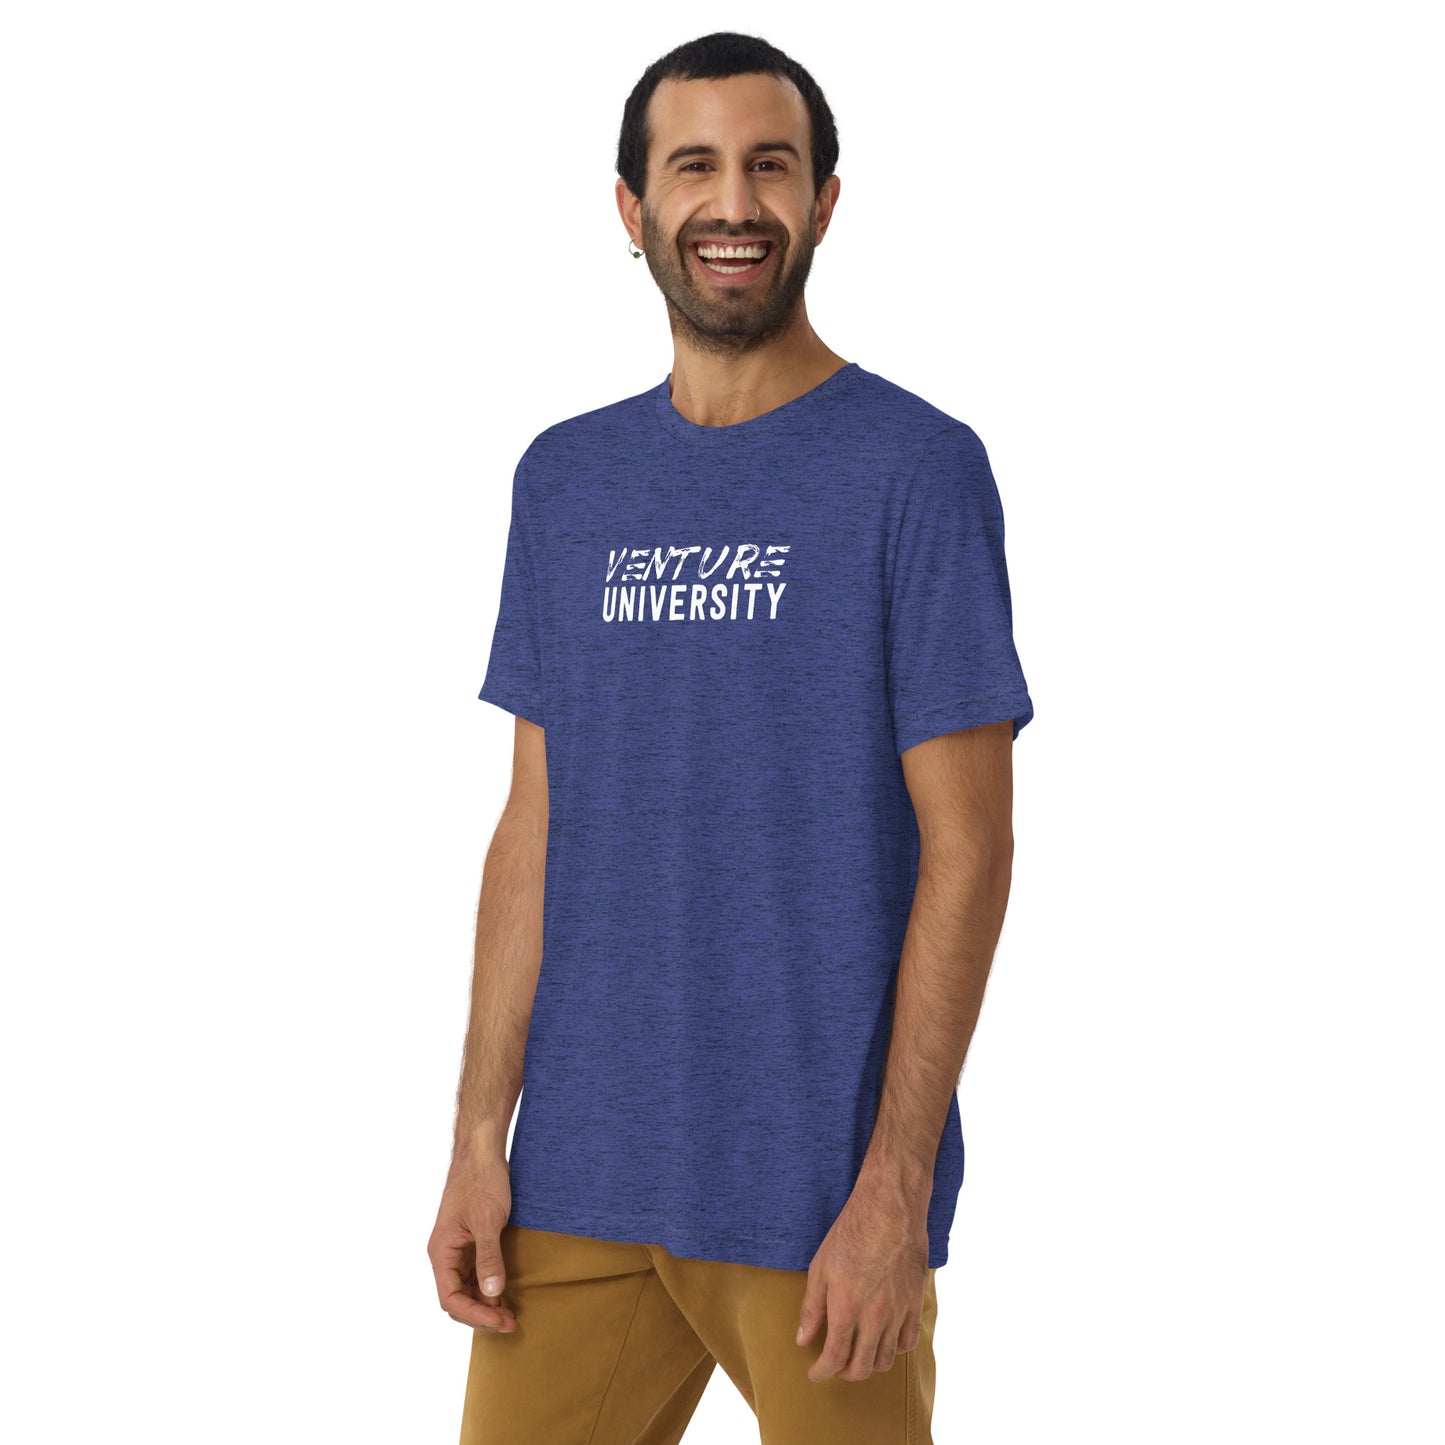 Venture University Unisex T-shirt (Extra Soft)